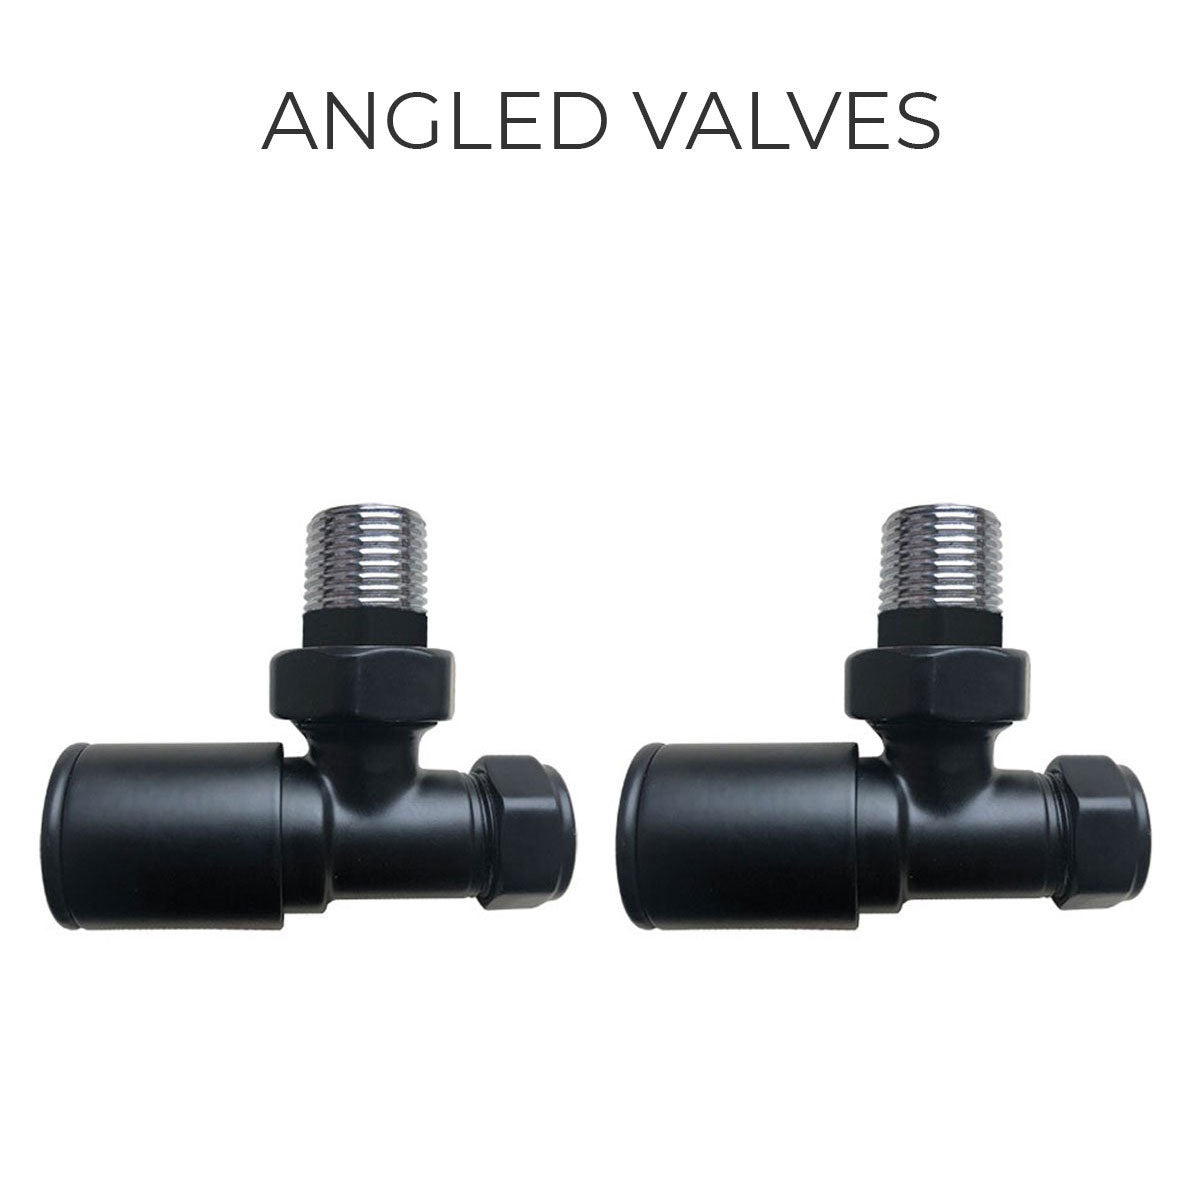 Deluxe Venice round angled rad valves black